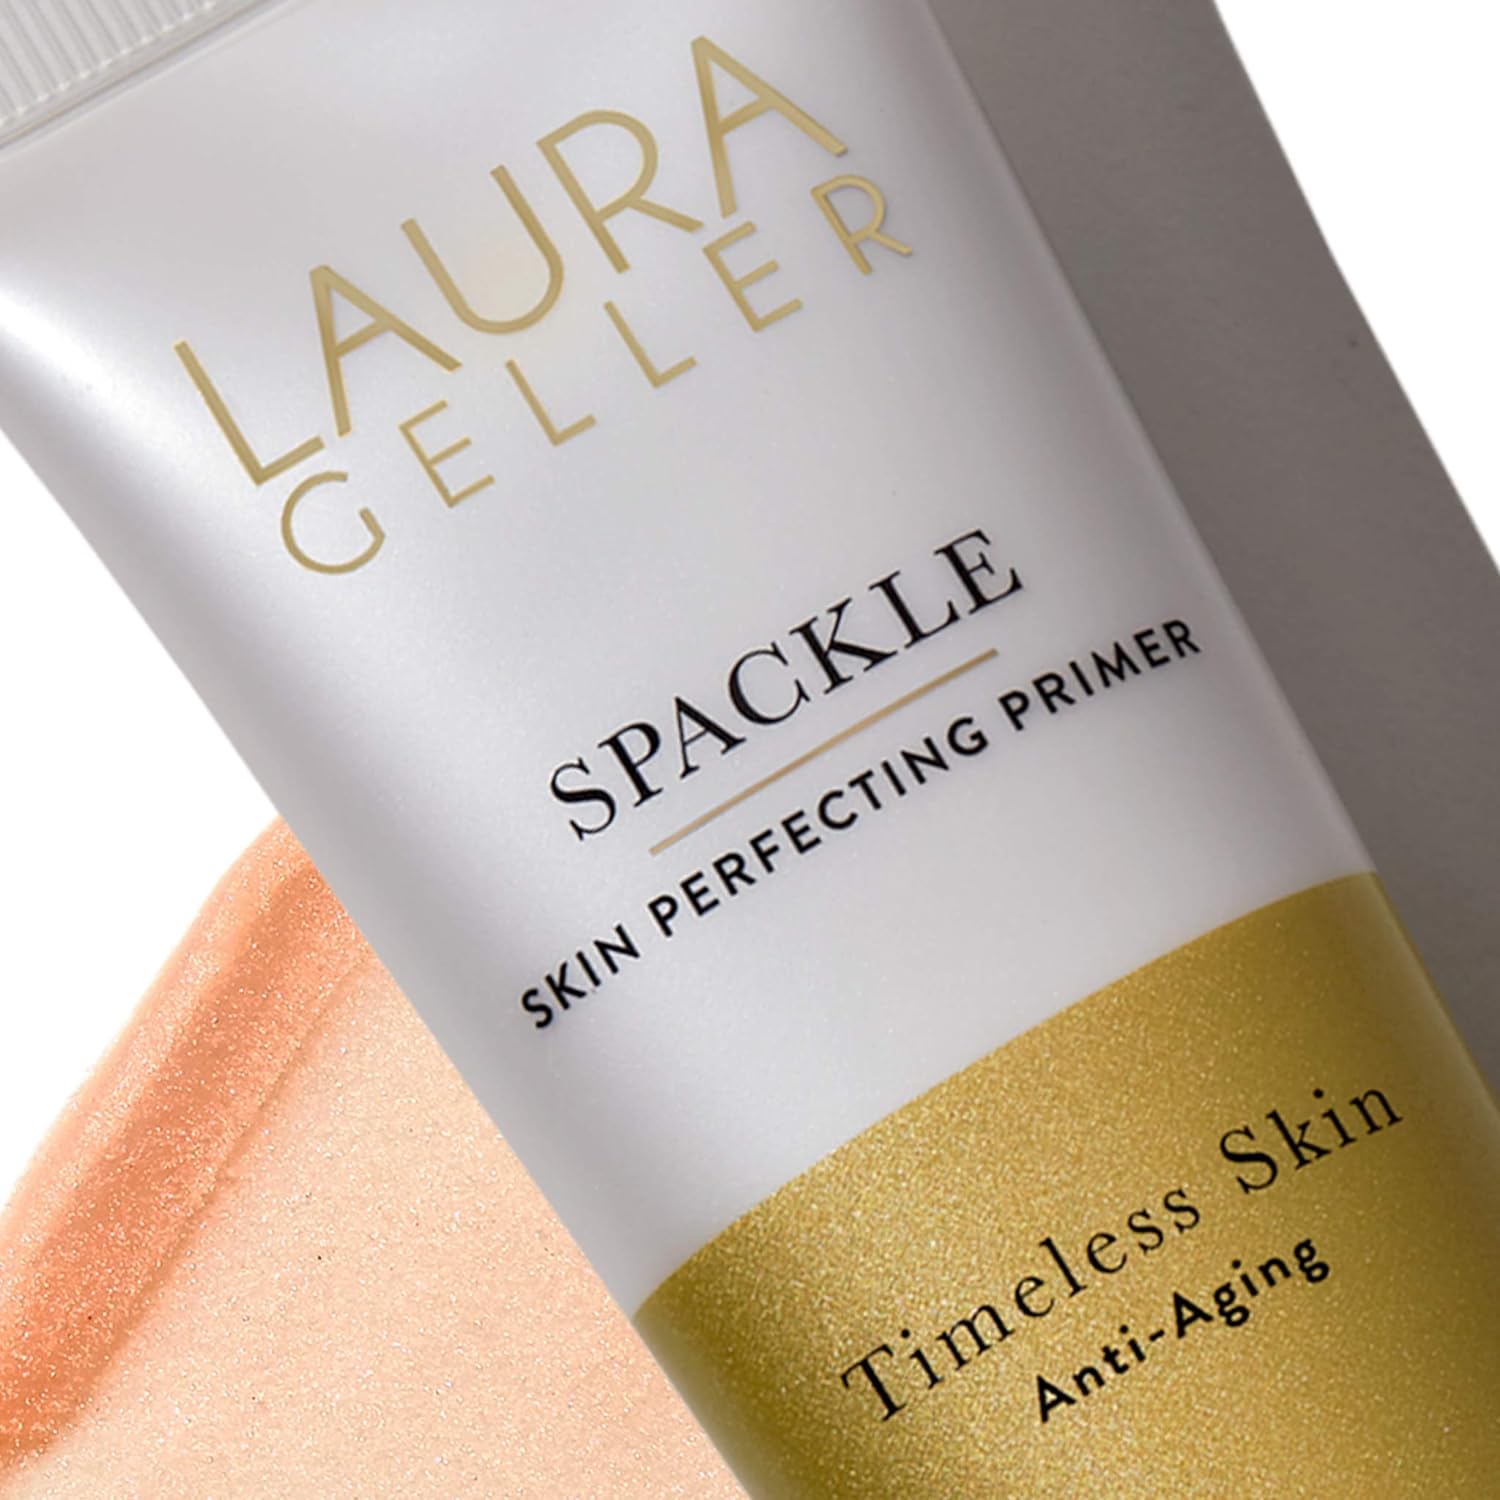  LAURA GELLER NEW YORK Spackle Timeless Skin Perfecting Primer, Anti-Aging, 2 Fl Oz